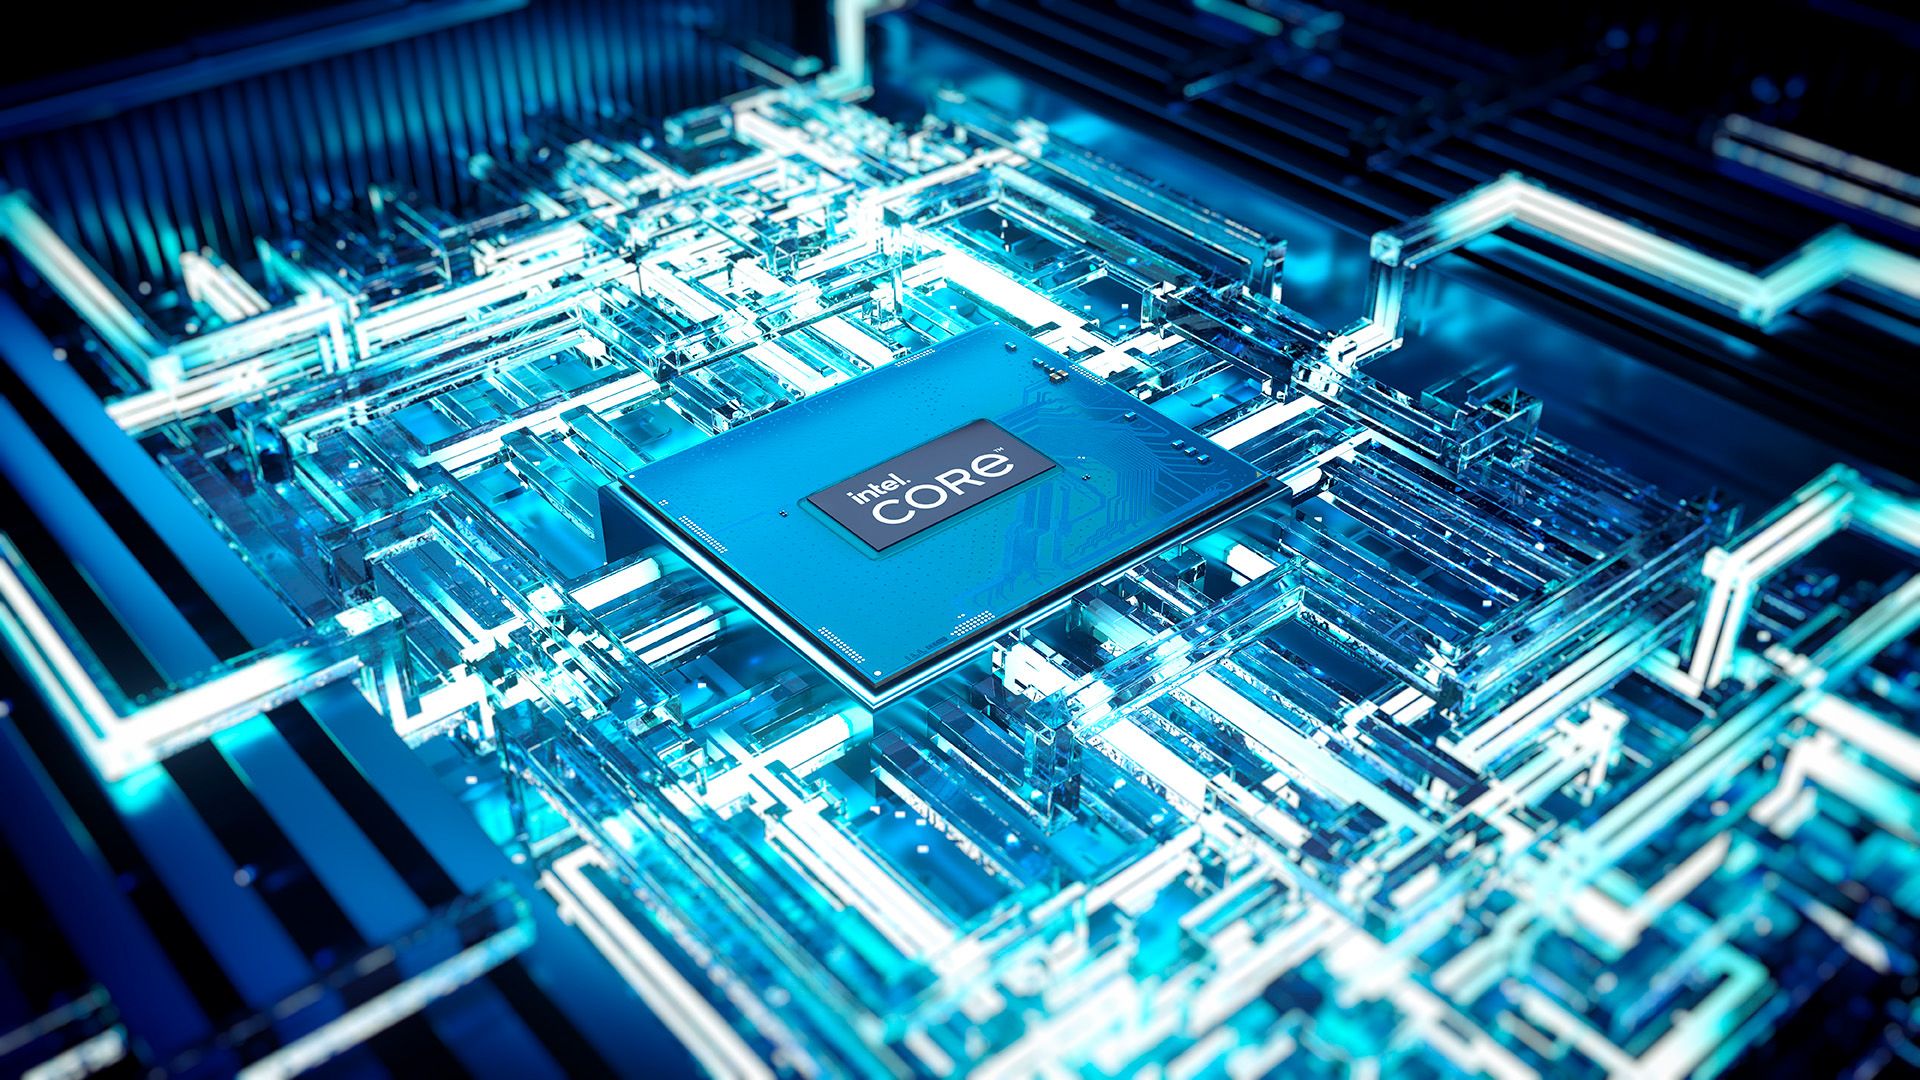 Intel Core processor on blue stylized background.